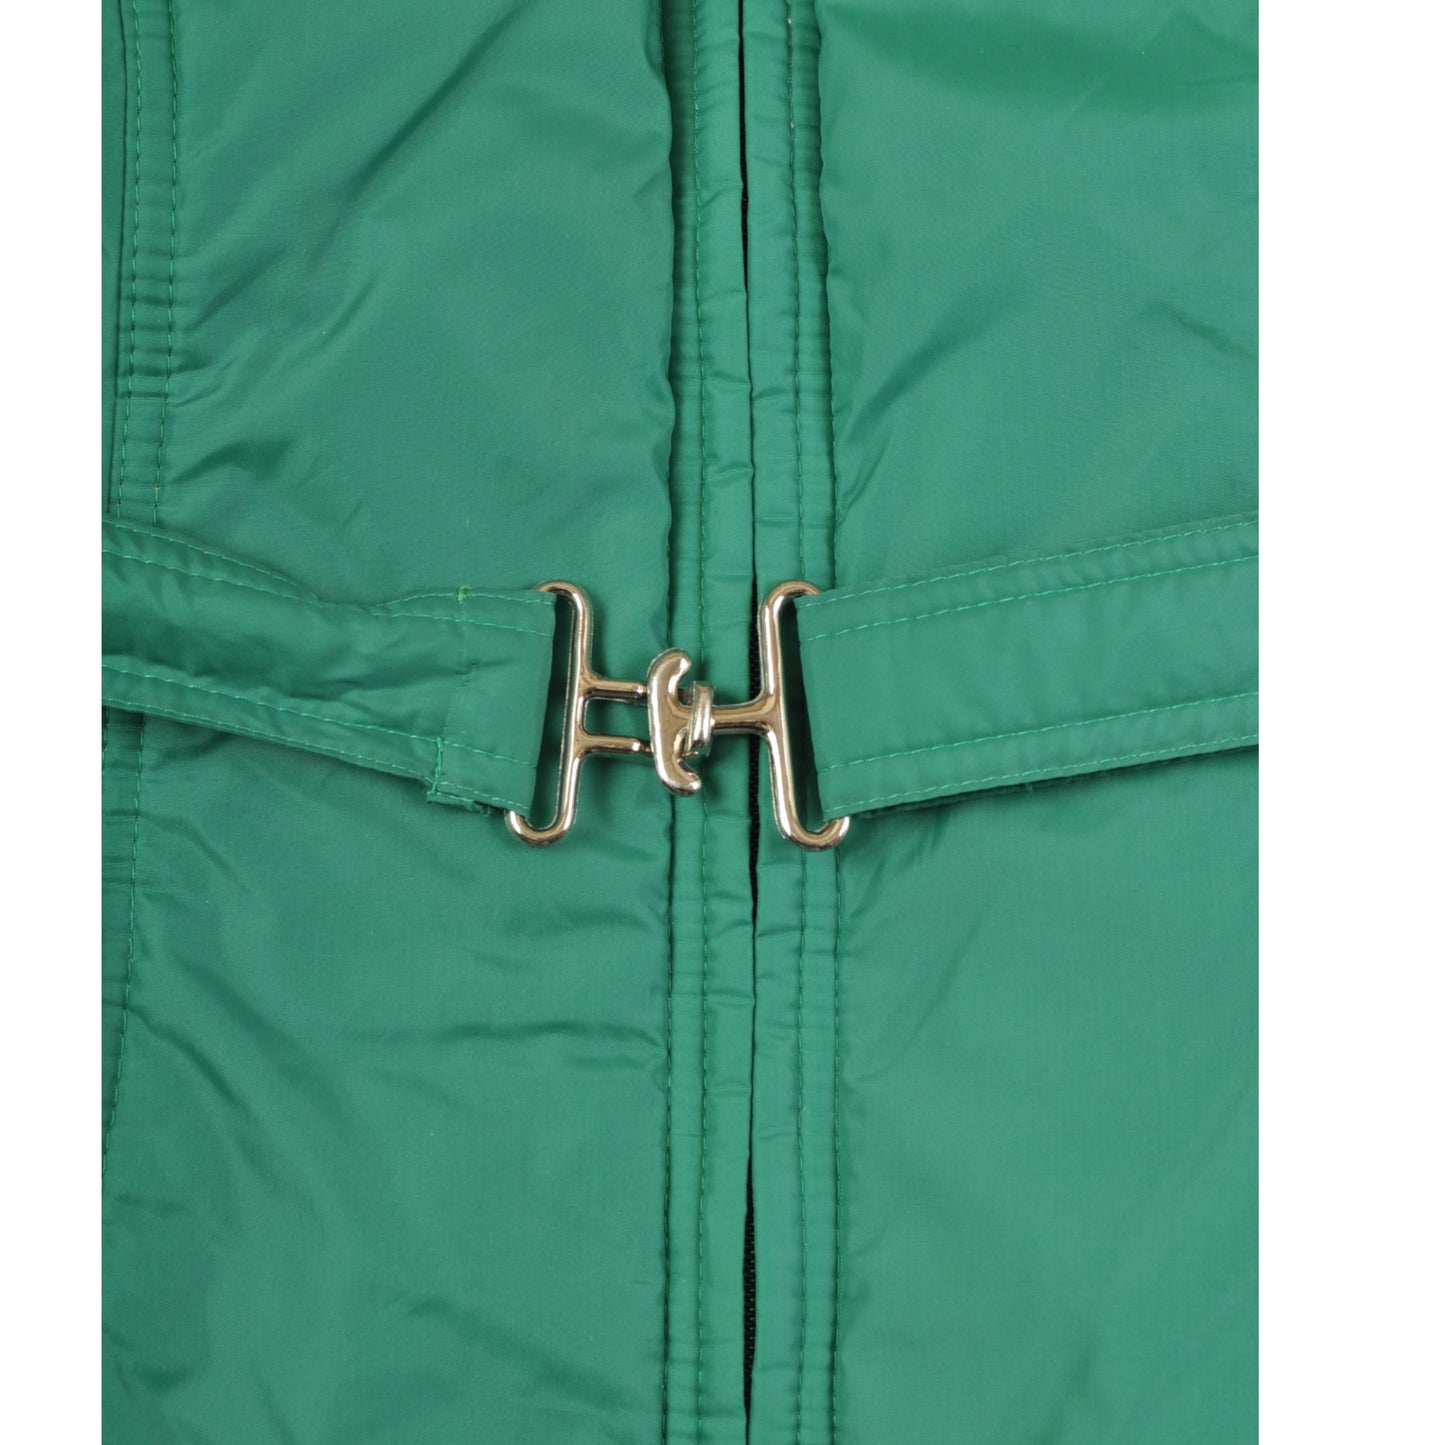 Vintage 80s Ski Jacket Green Ladies XL